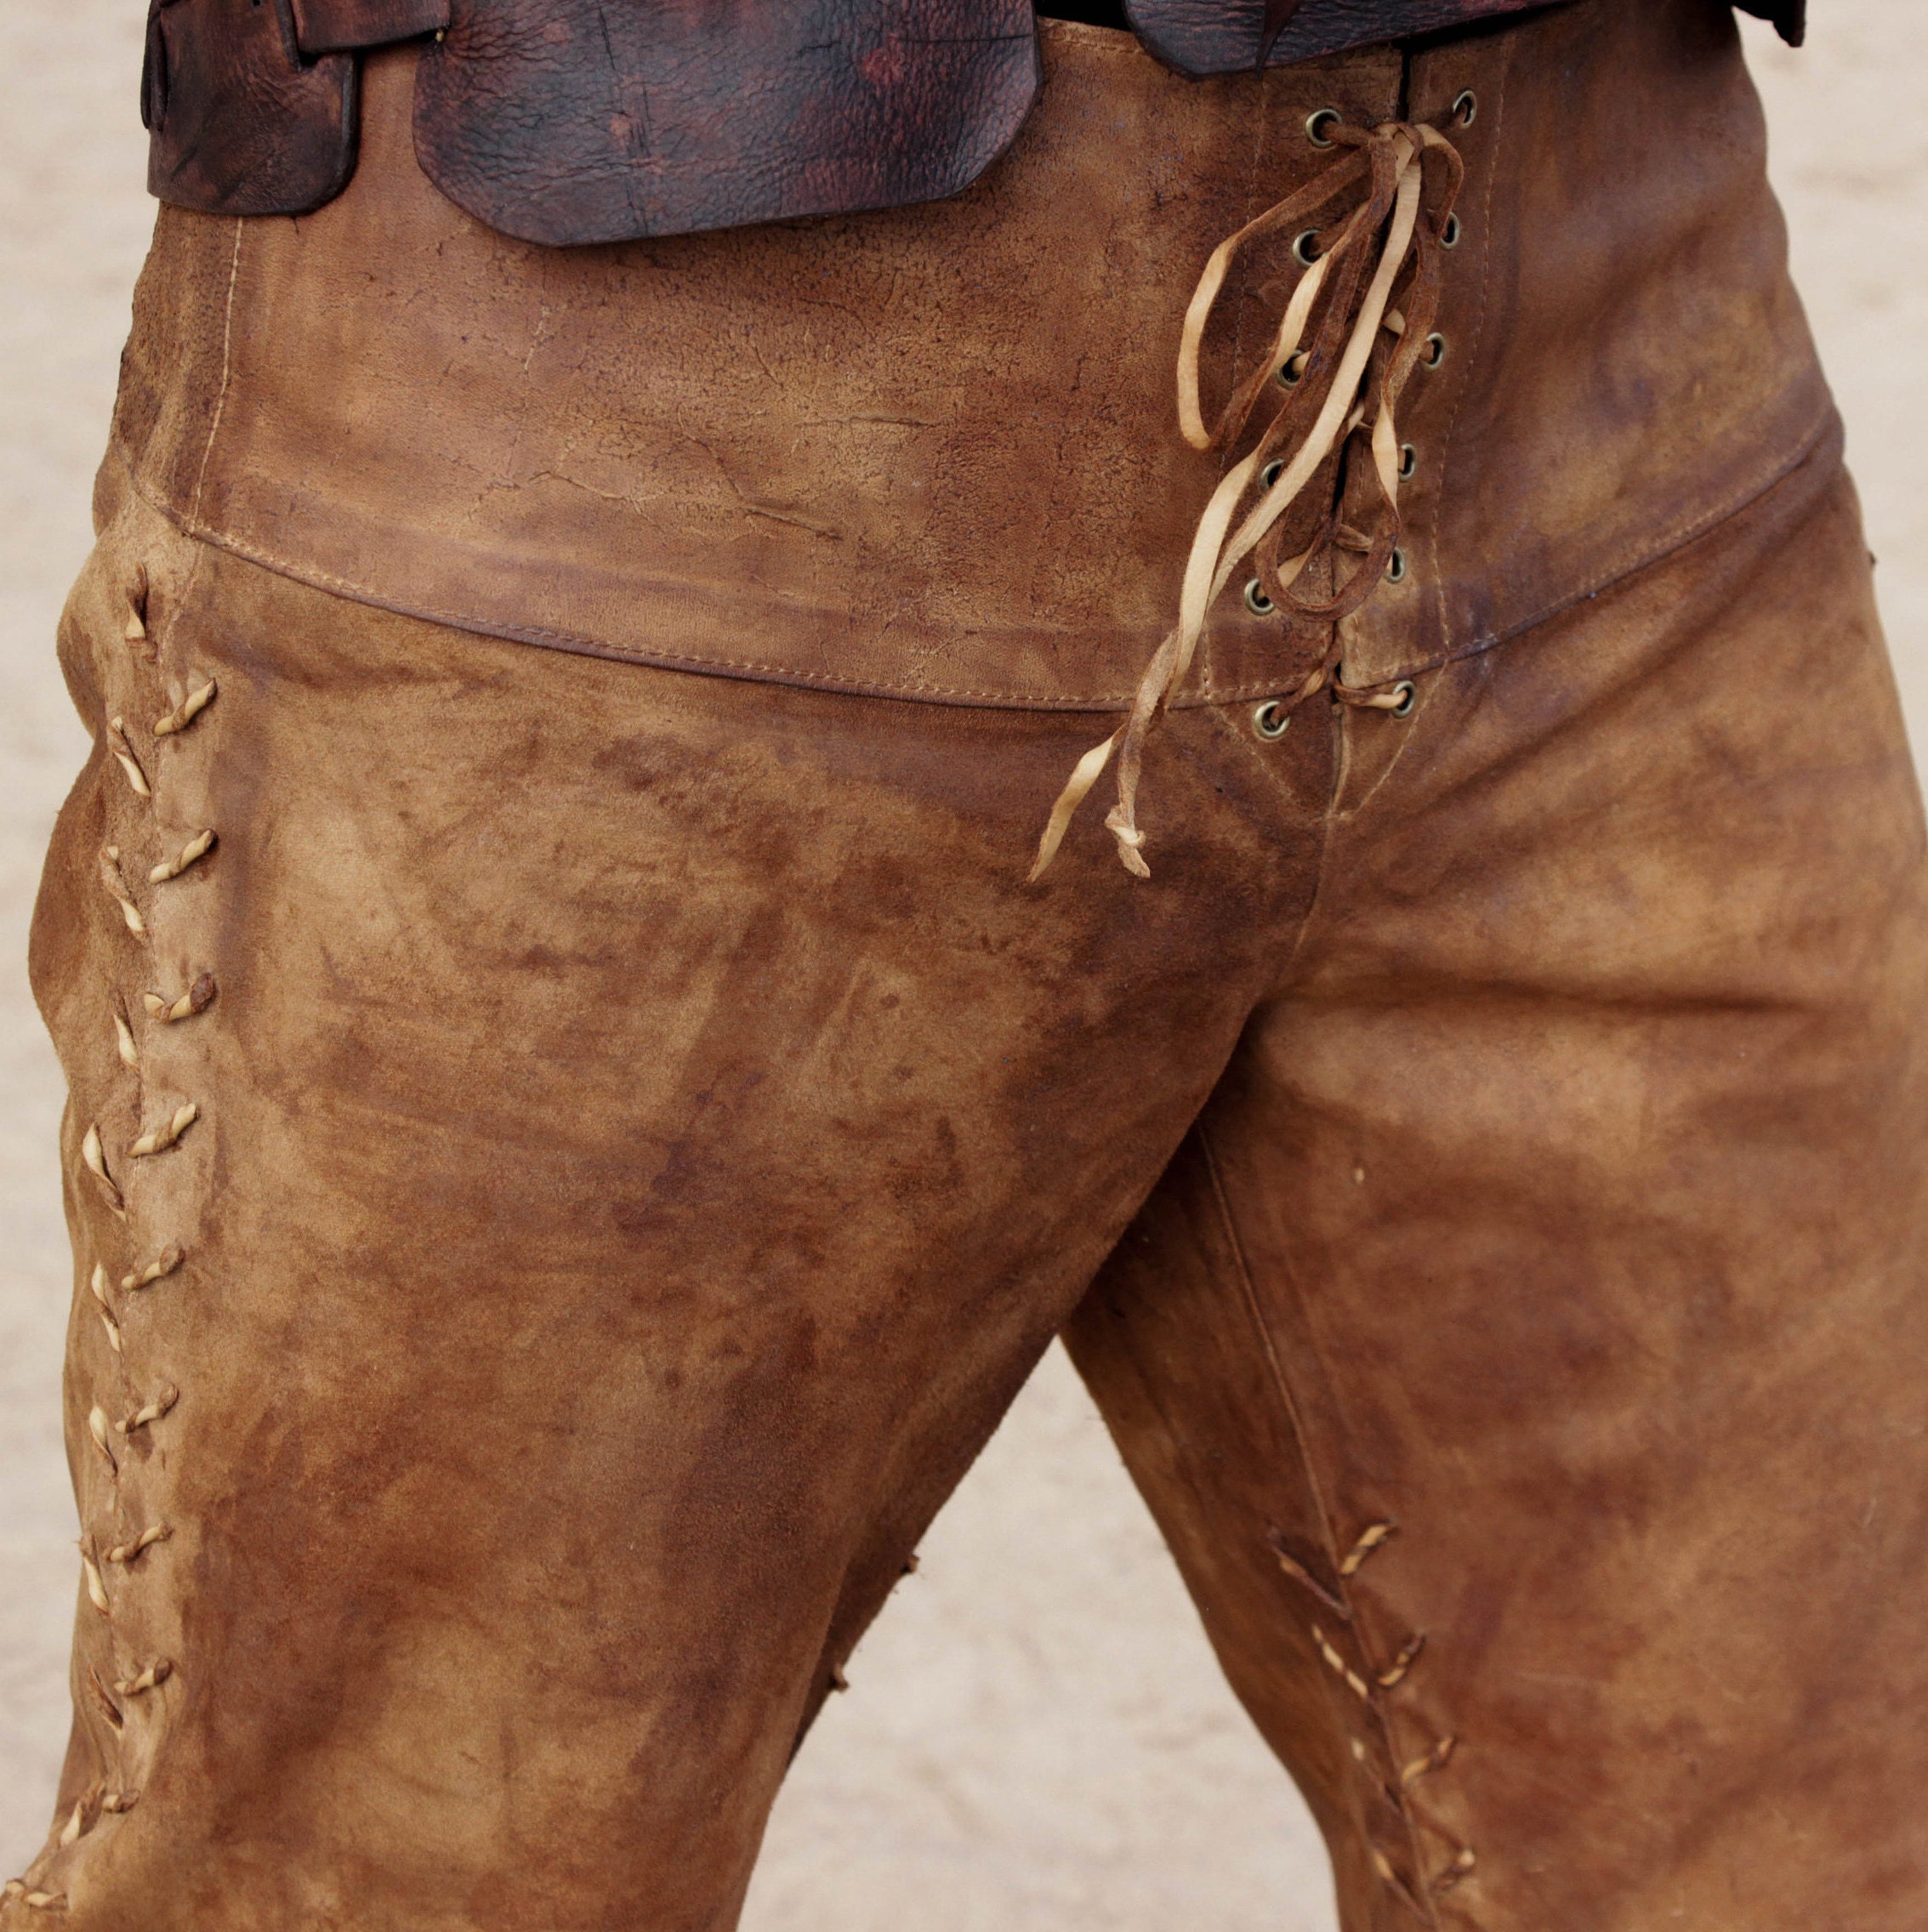 Man's Medieval Leather Pants Ragnar Lothbrok pants | Etsy